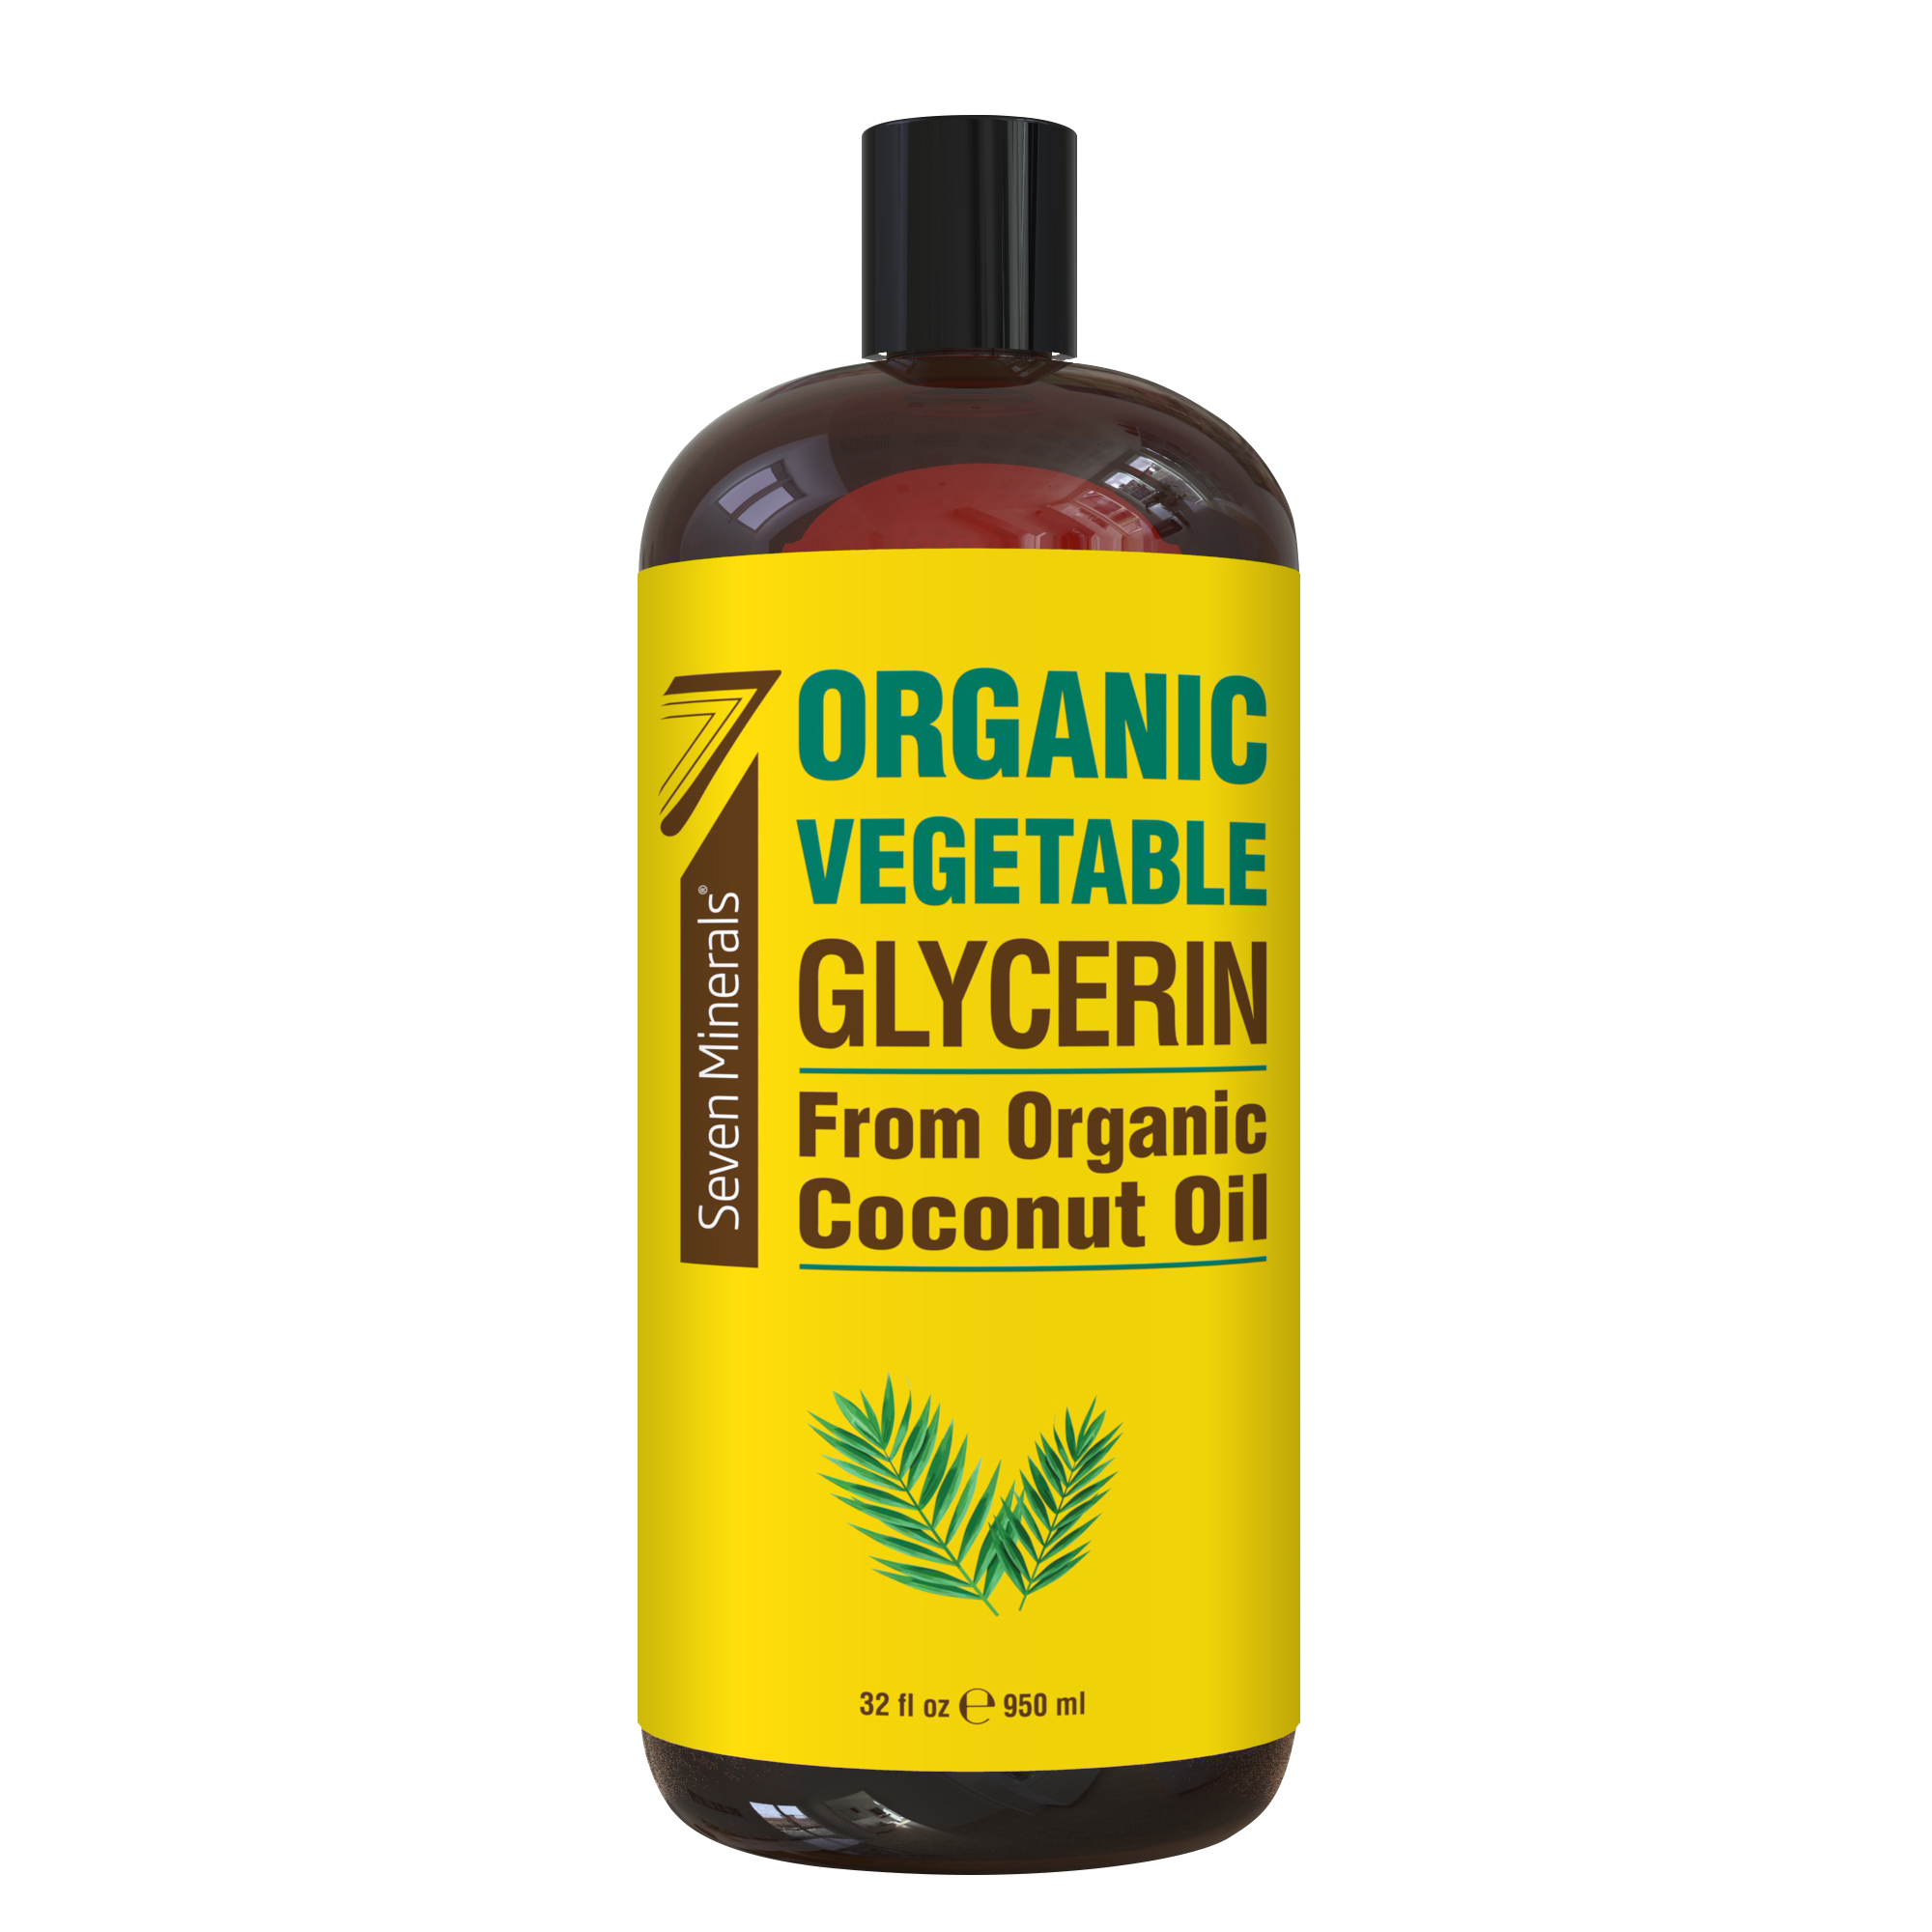 Organic Glycerin